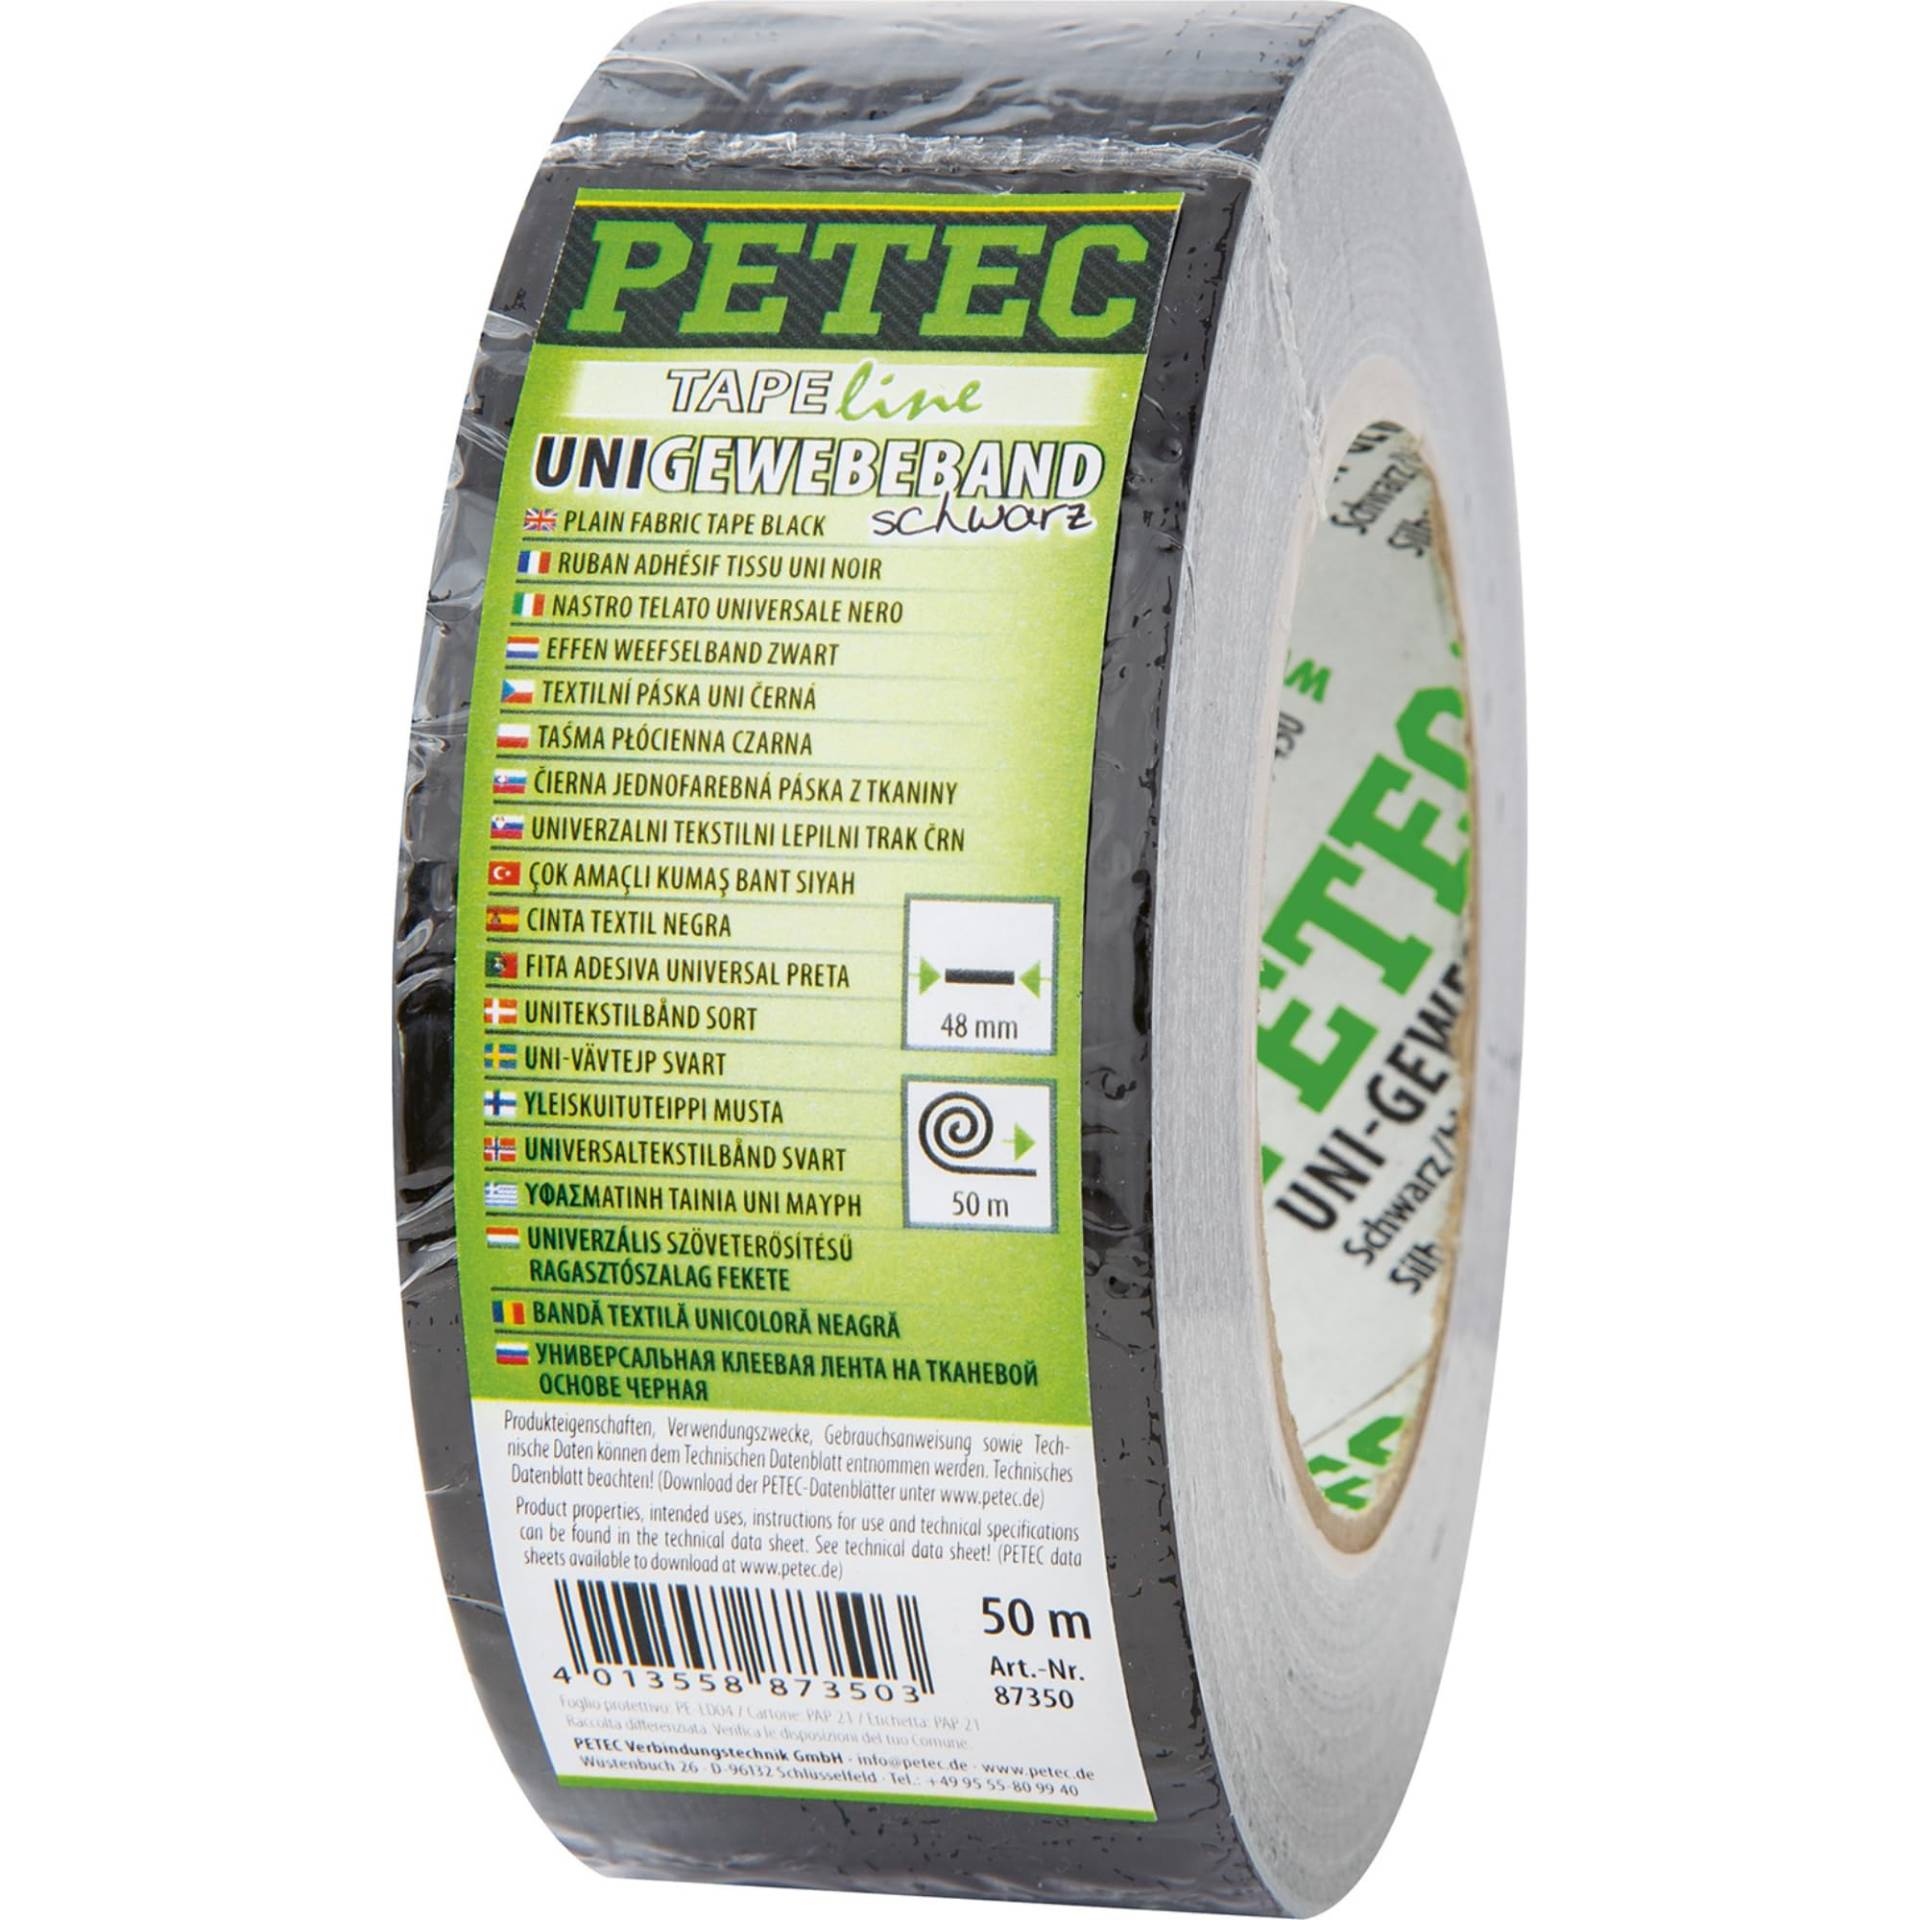 PETEC Uni-Gewebeband schwarz 50mx48mm, Gewebeverstärktes Tape zum reparieren, befestigen, bündeln & verstärken. Gewebereparatur-Klebeband 87350 von PETEC